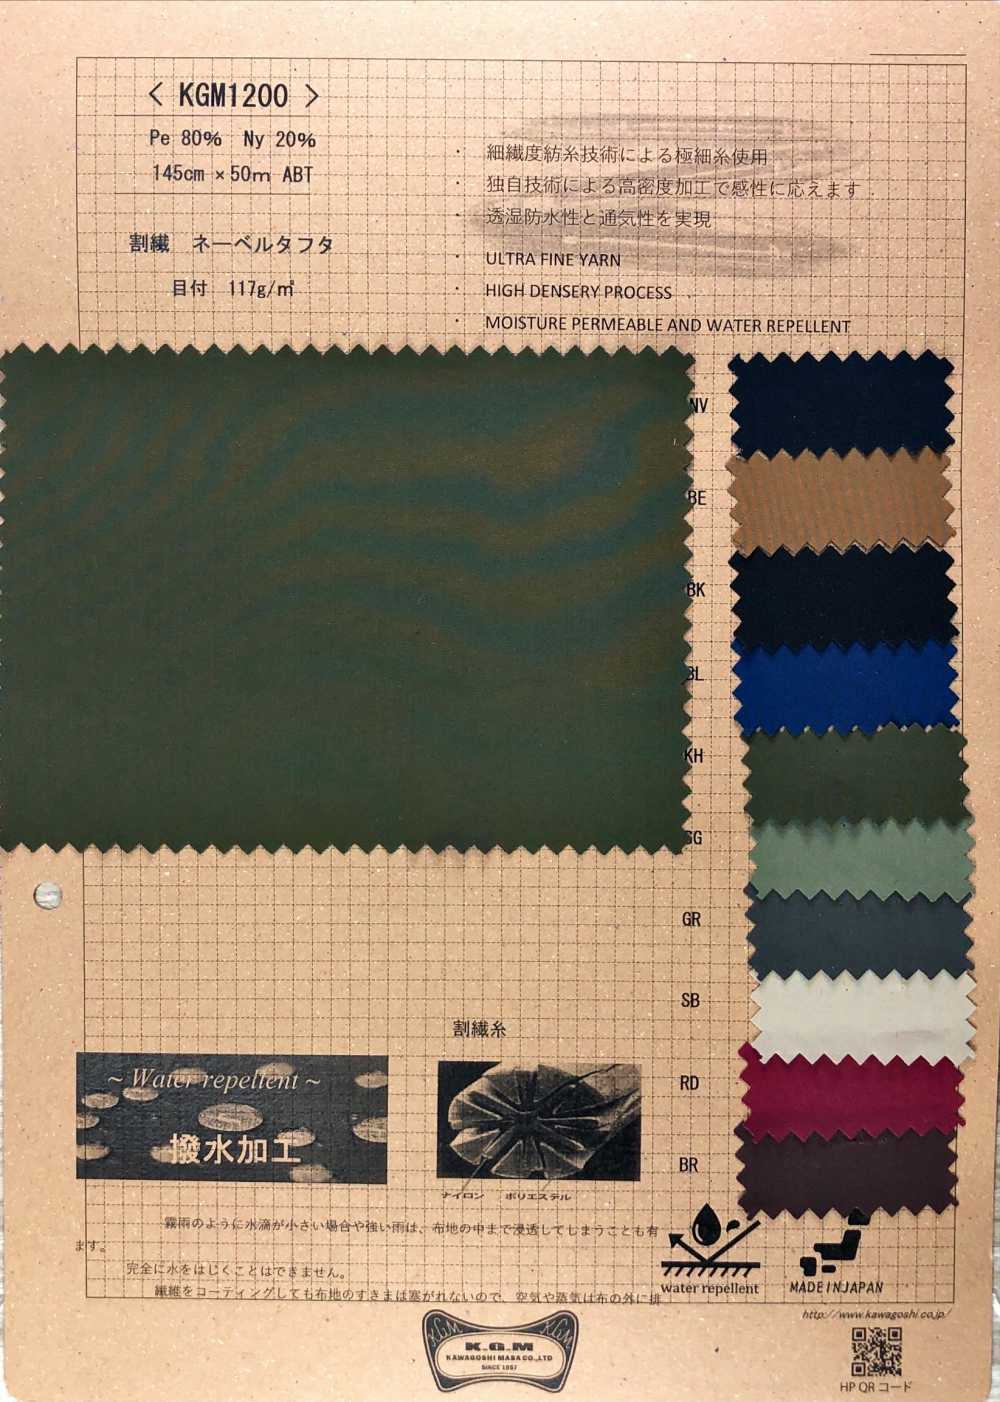 KGM1200 Fibre Fendue Nebel Taffetas[Fabrication De Textile] Masaru Kawagoe